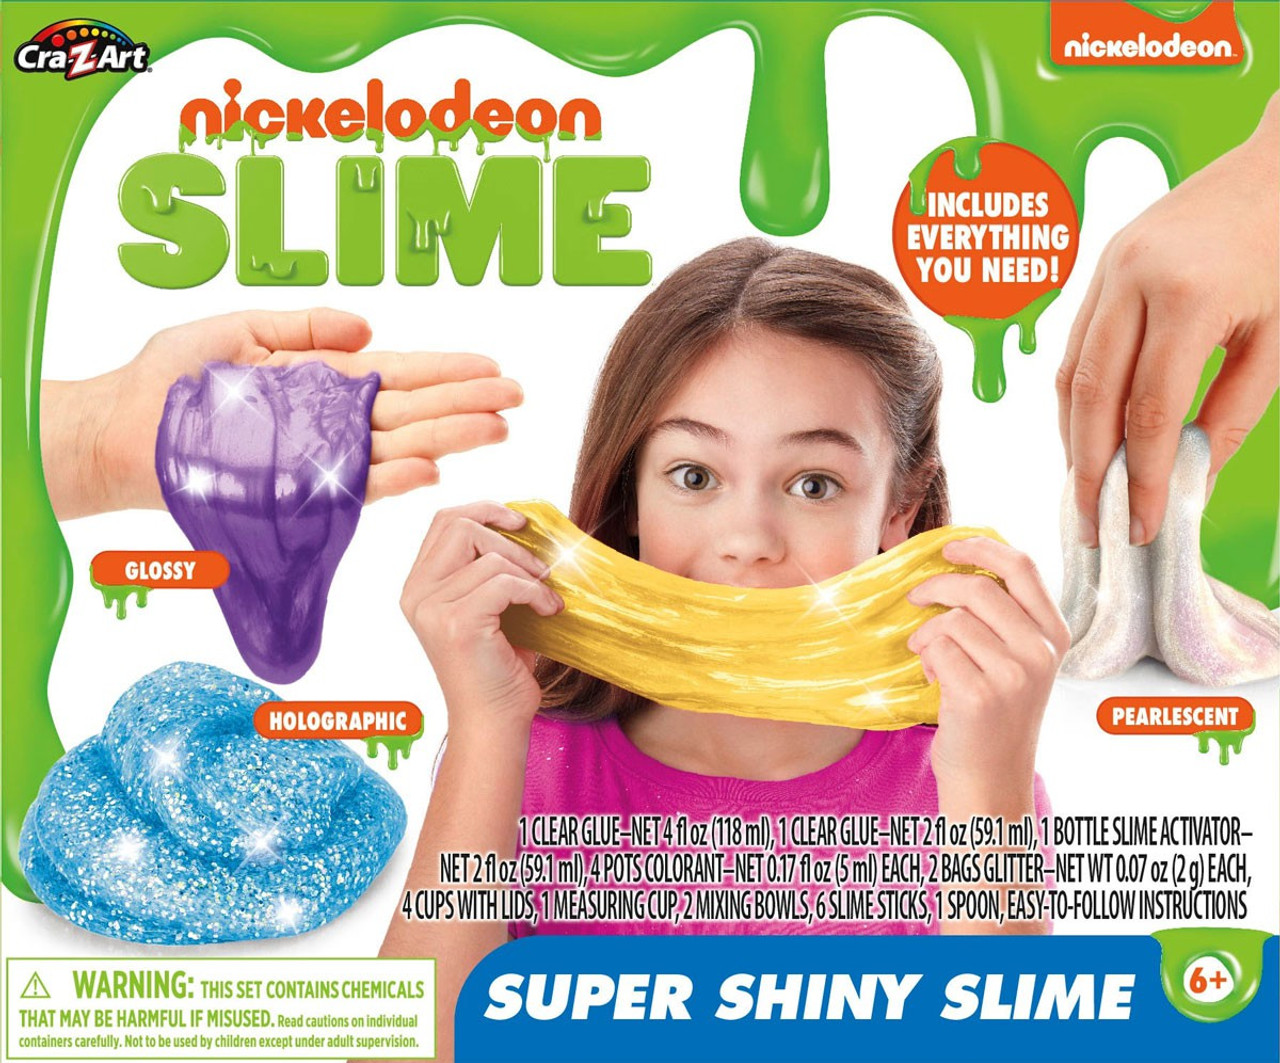 Nickelodeon Super Shiny Slime Kit